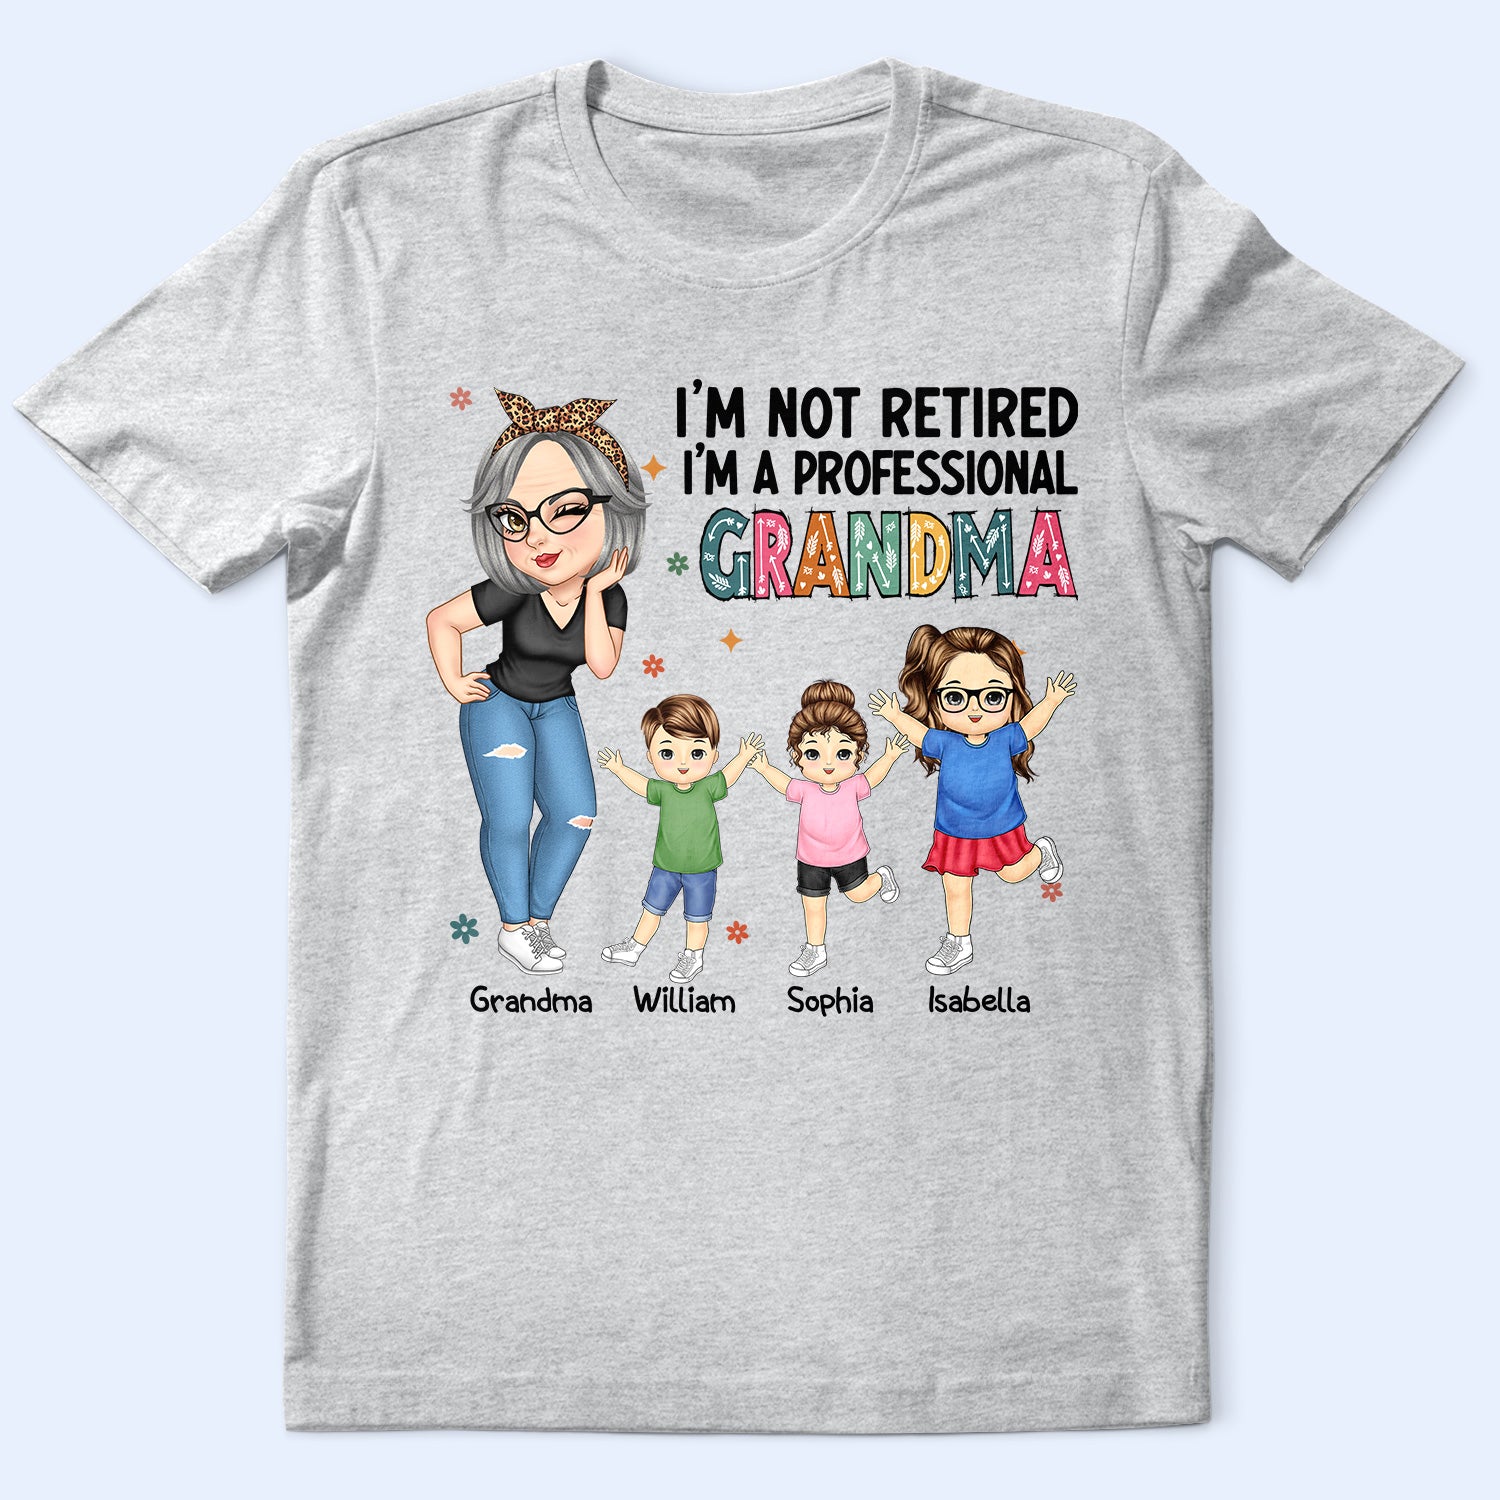 I'm A Professional Grandma - Funny, Retirement Gift For Grandma, Mom, Nana, Gigi - Personalized T Shirt